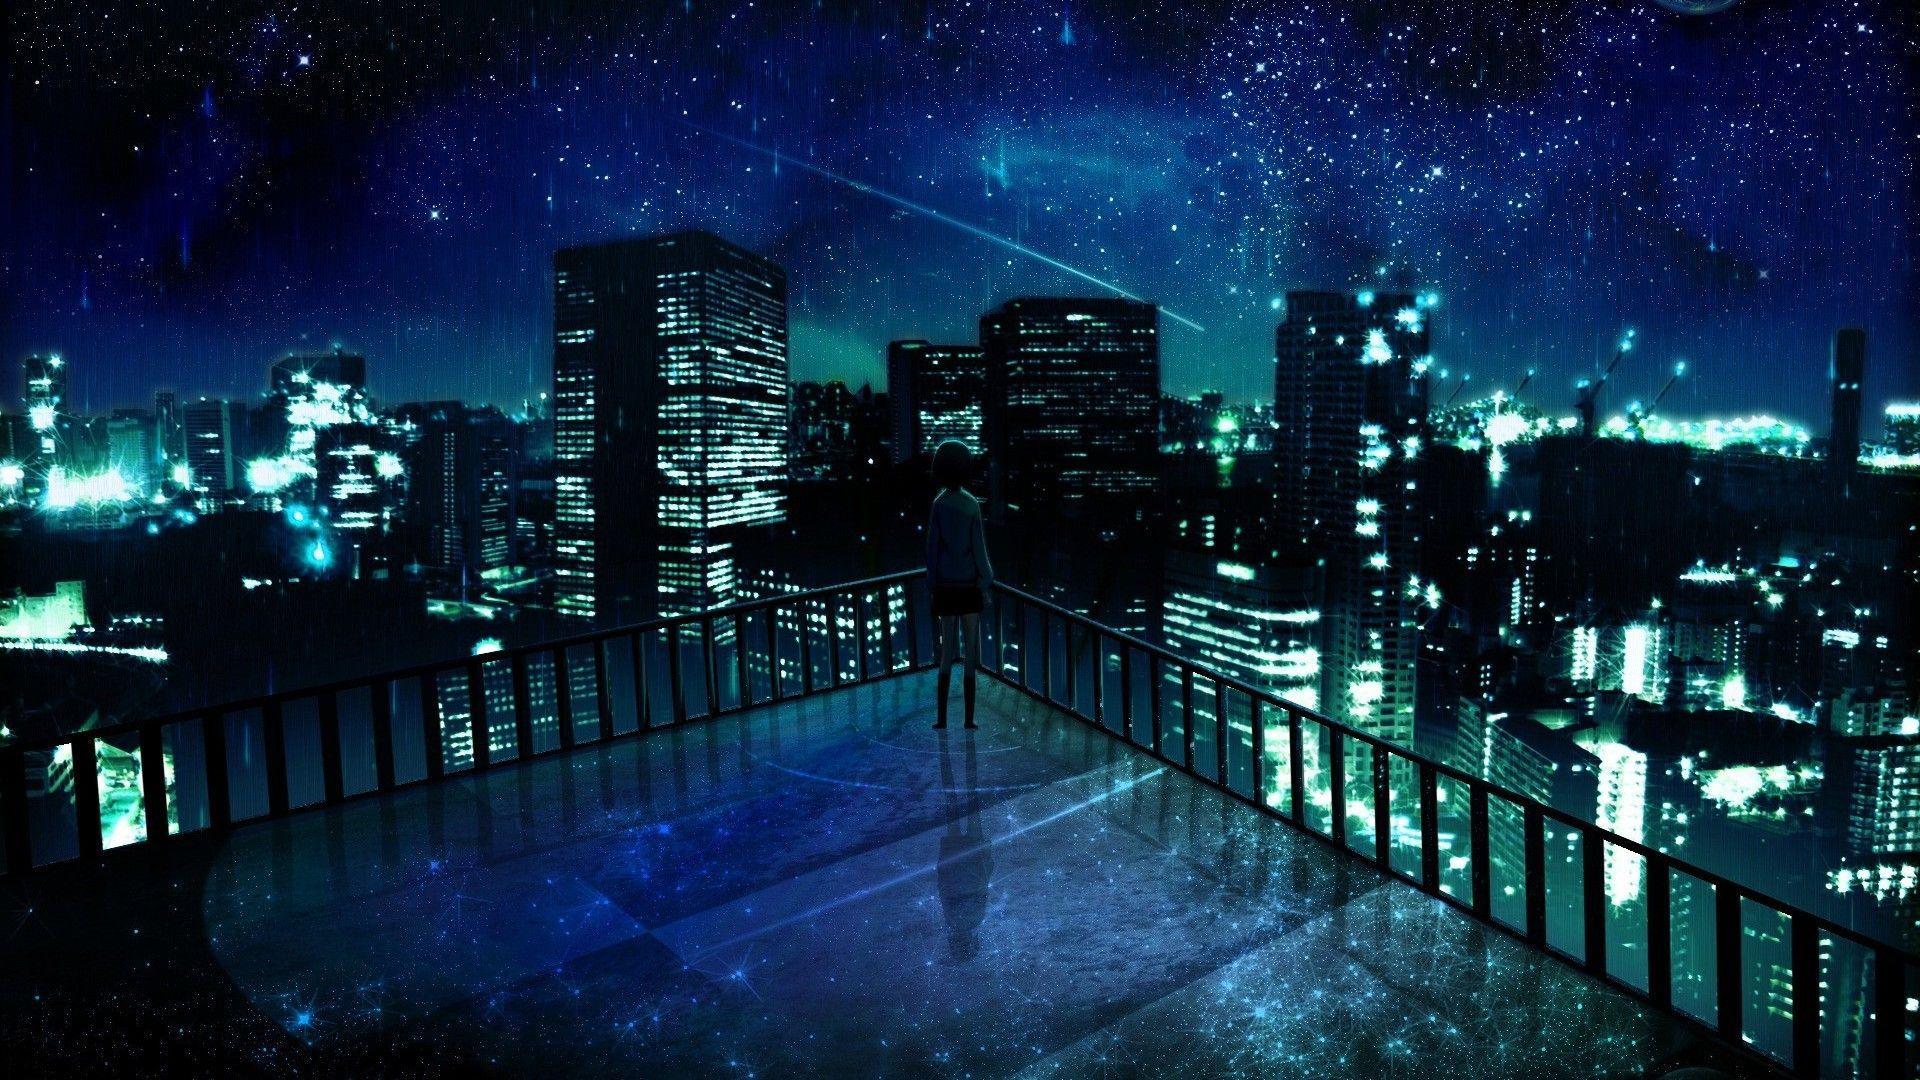 Stunning Anime City Wallpaper 42583 1920x1080 px